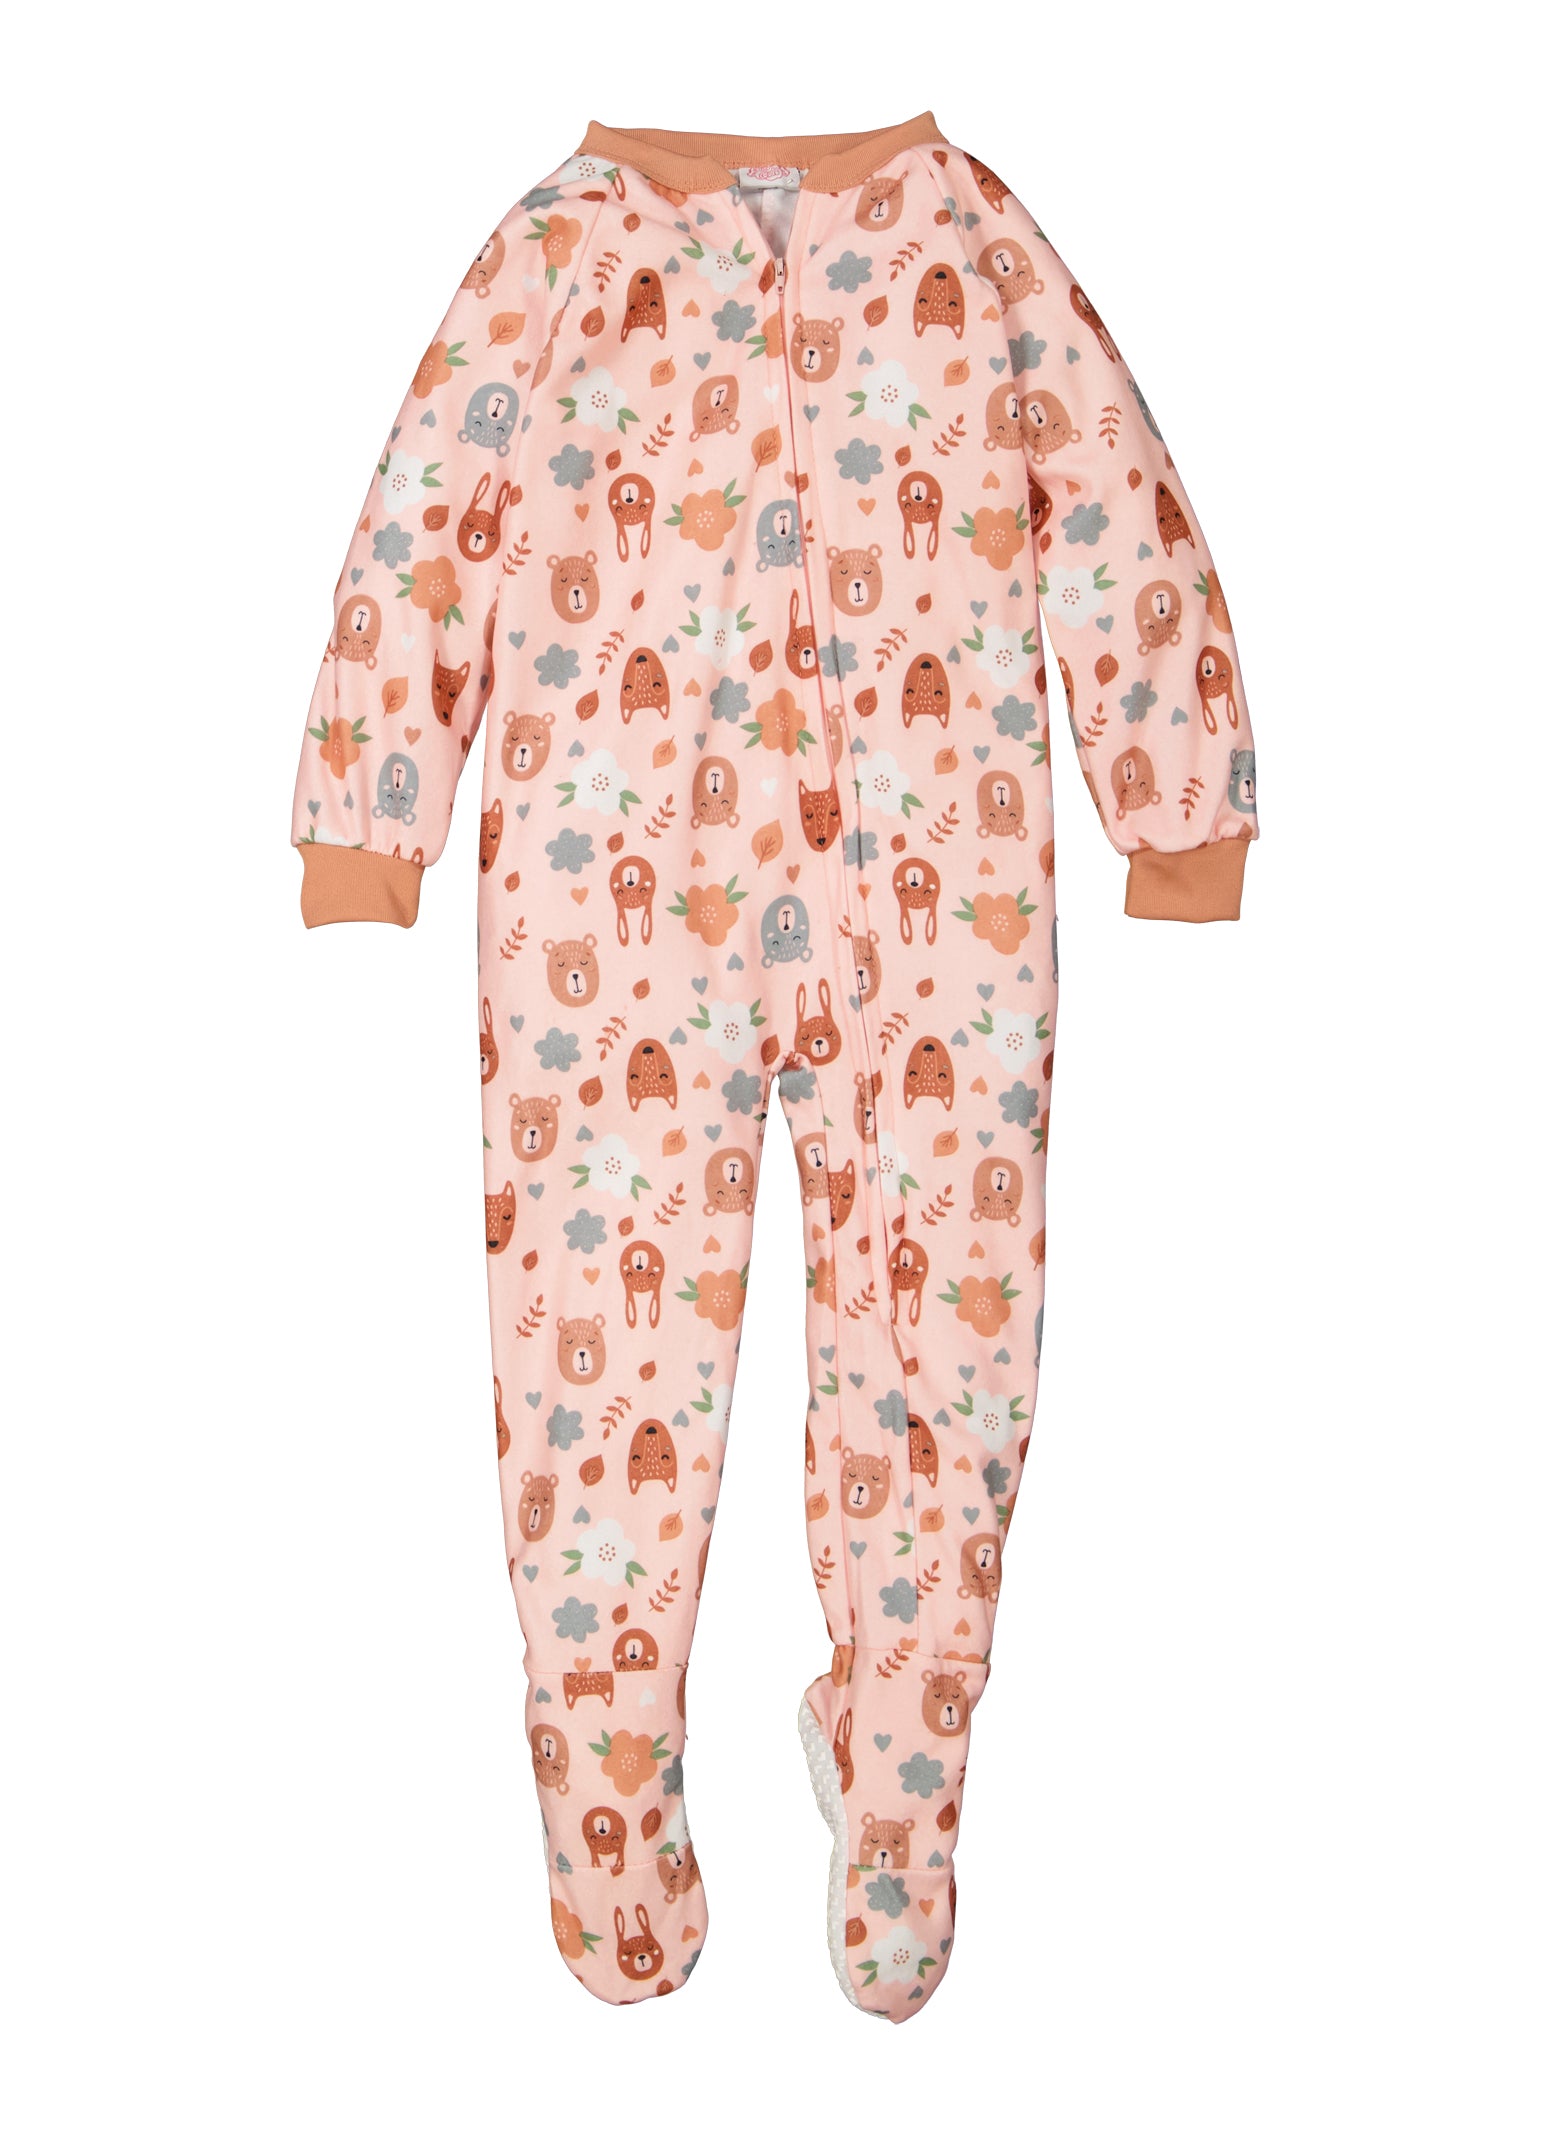 Little Girls Printed Fleece Footed Pajamas, Beige, Size 4